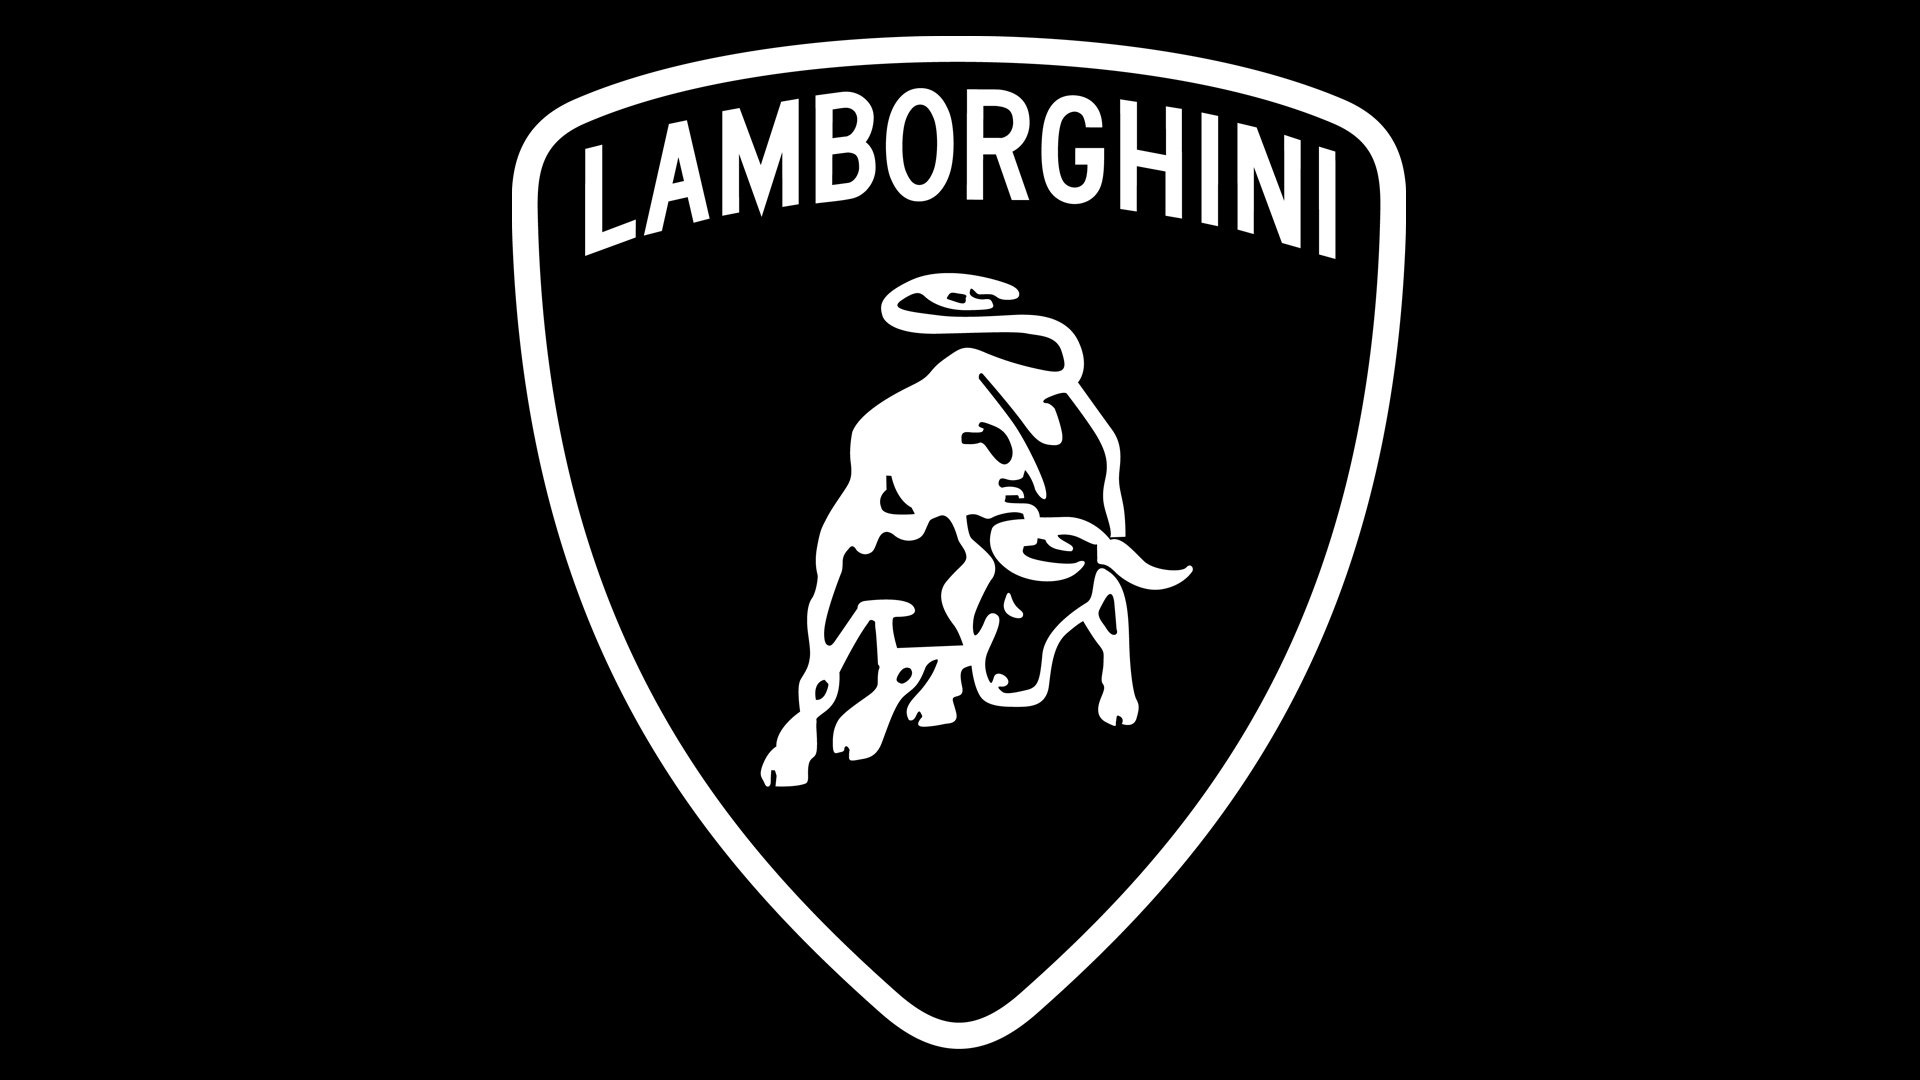 Lamborghini logo, Symbol meaning, History, Brand, 1920x1080 Full HD Desktop